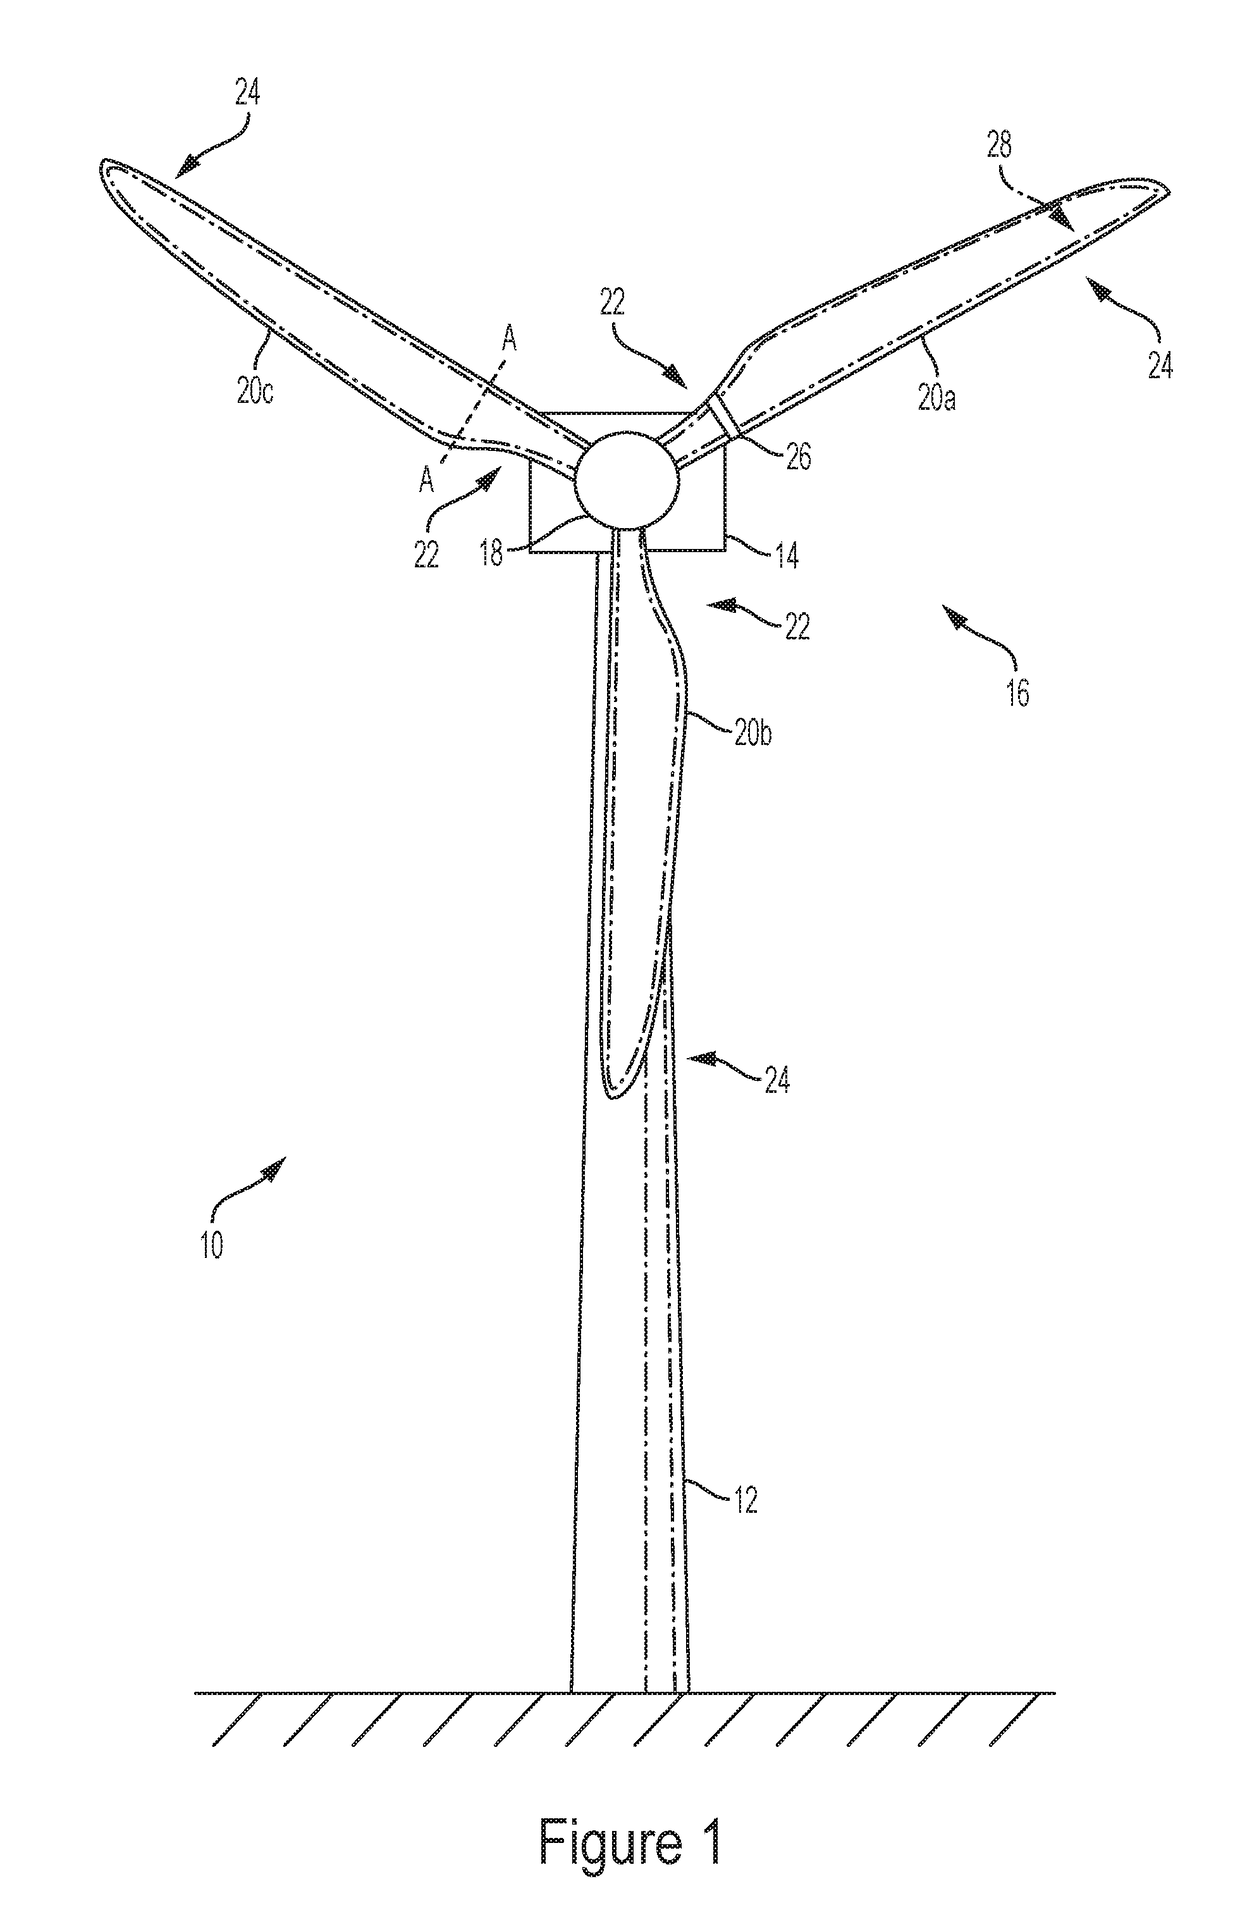 Method of calibrating load sensors of a wind turbine